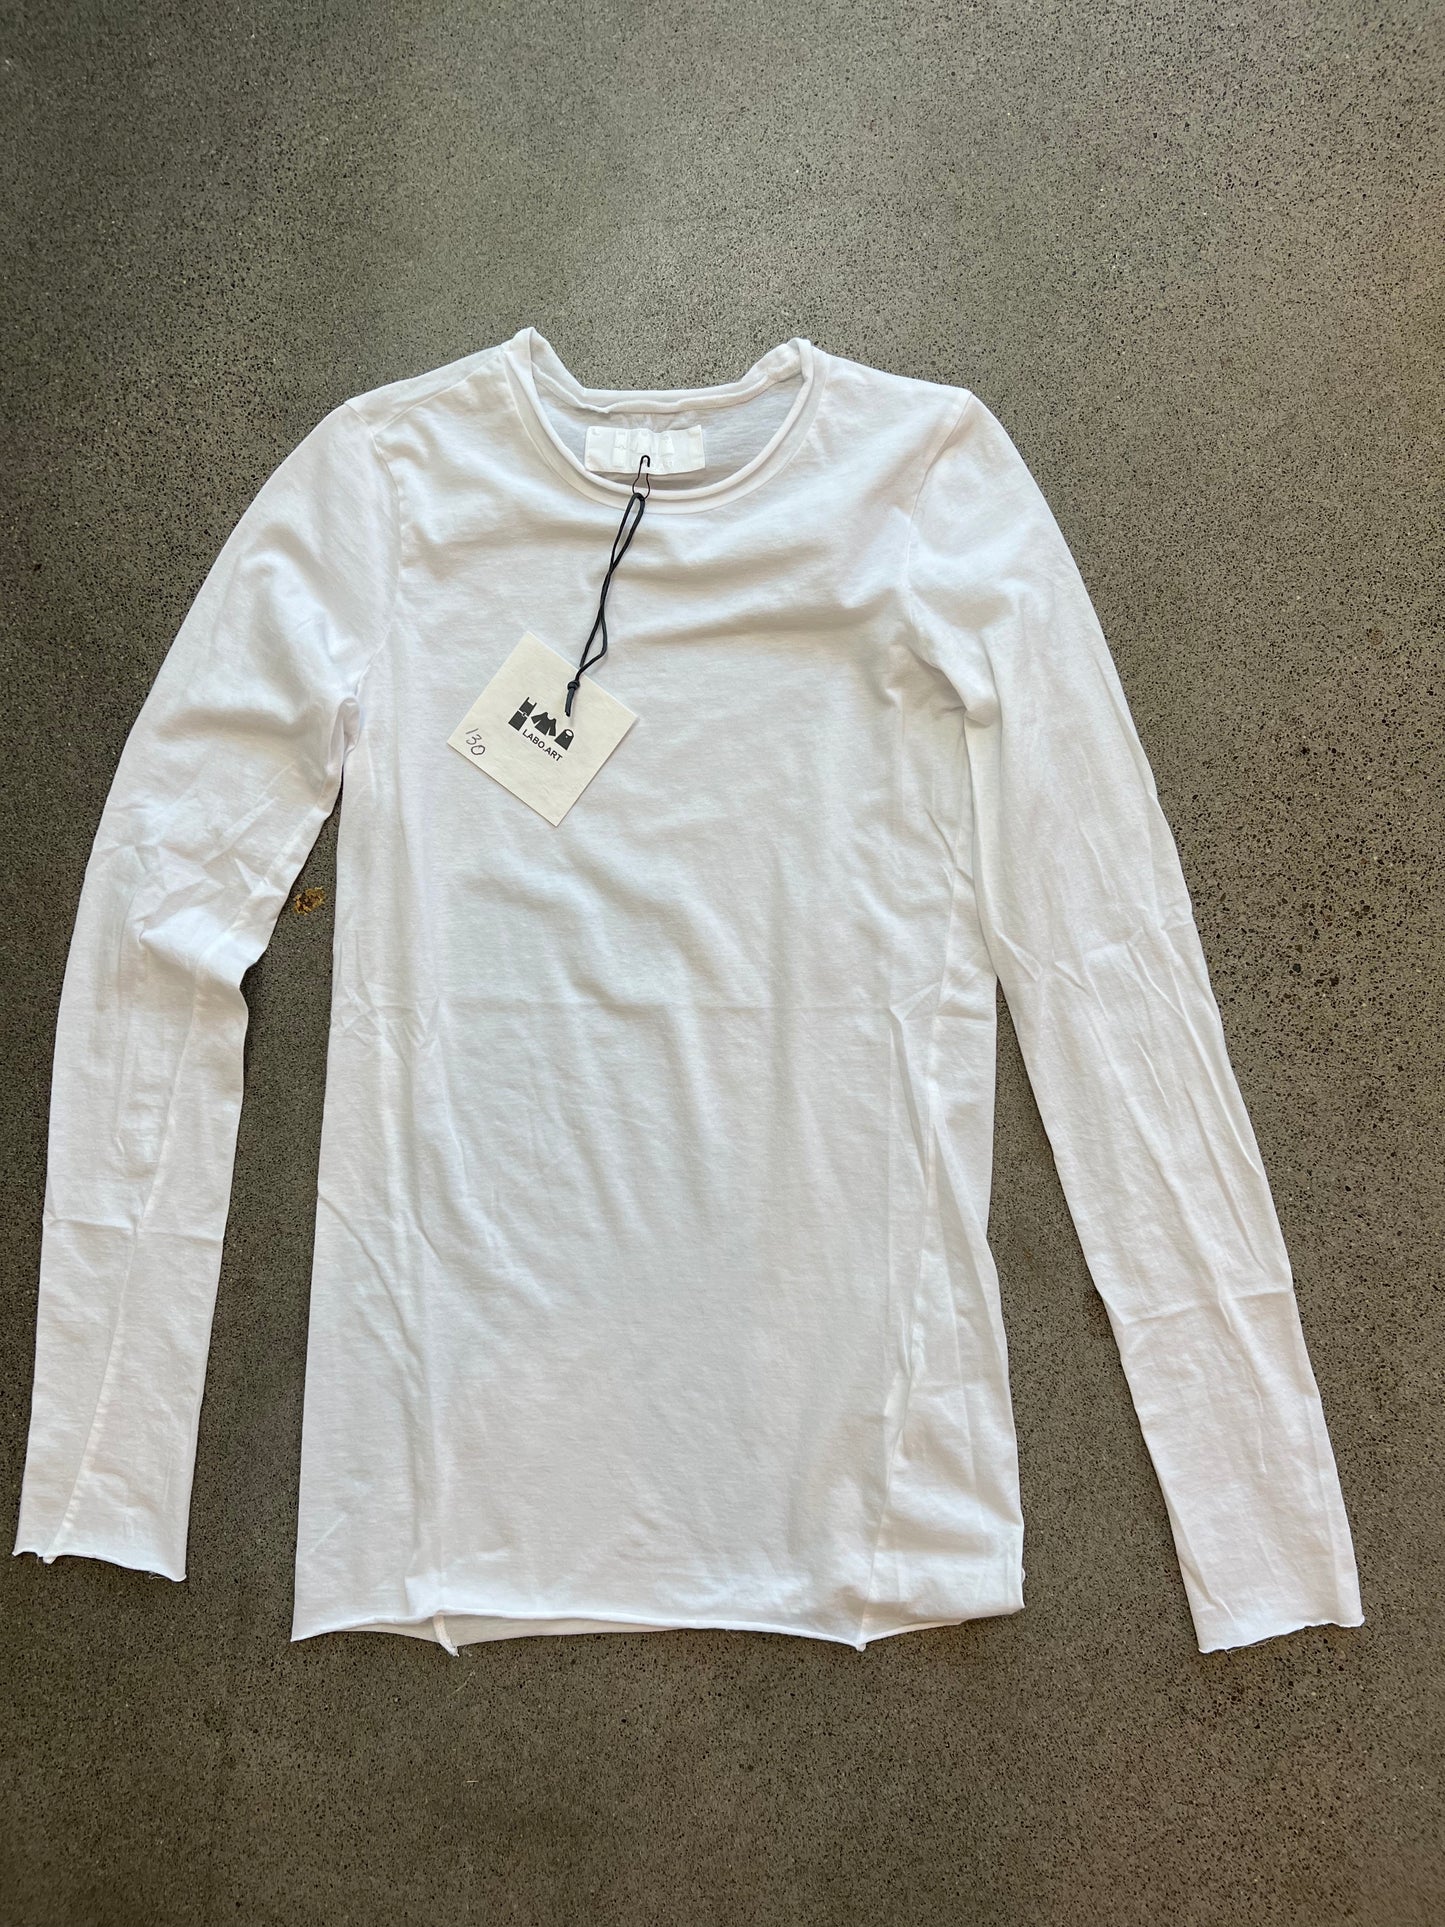 Labo Art - Basica Tee Shirt Long Sleeve in Marigold or White